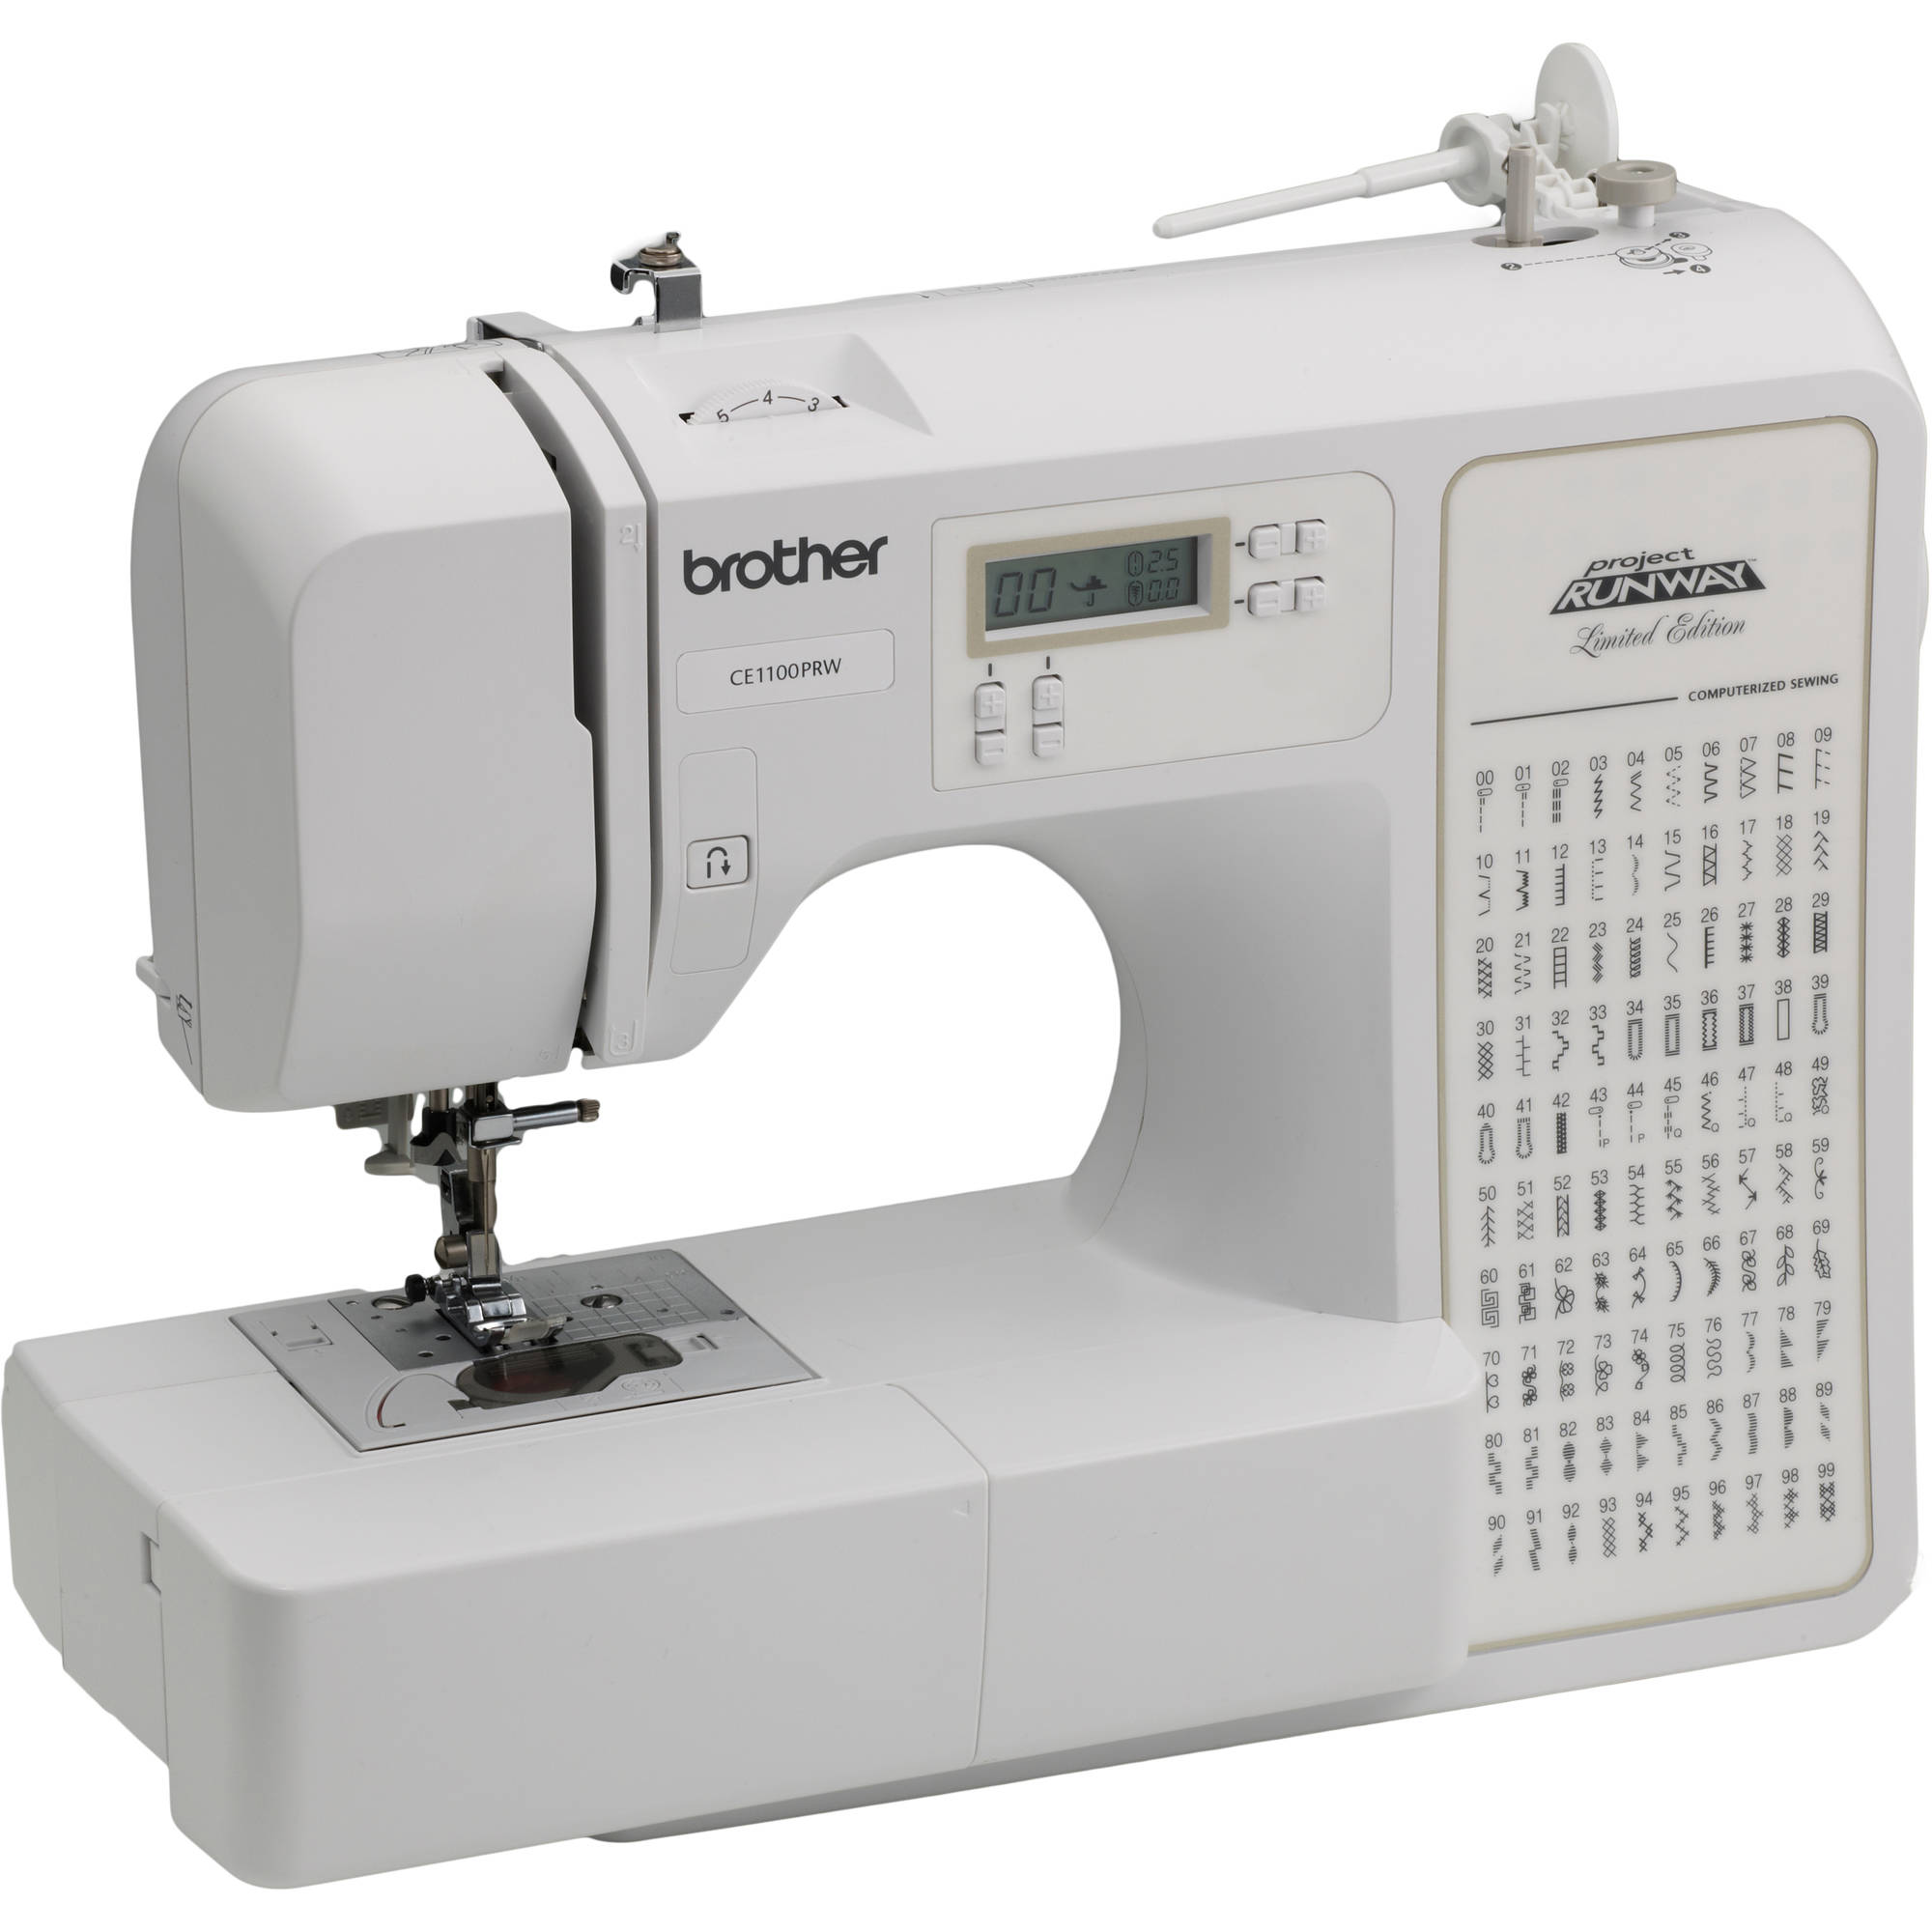 Computerized 100-Stitch Project Runway Sewing Machine CE1100PRW ...